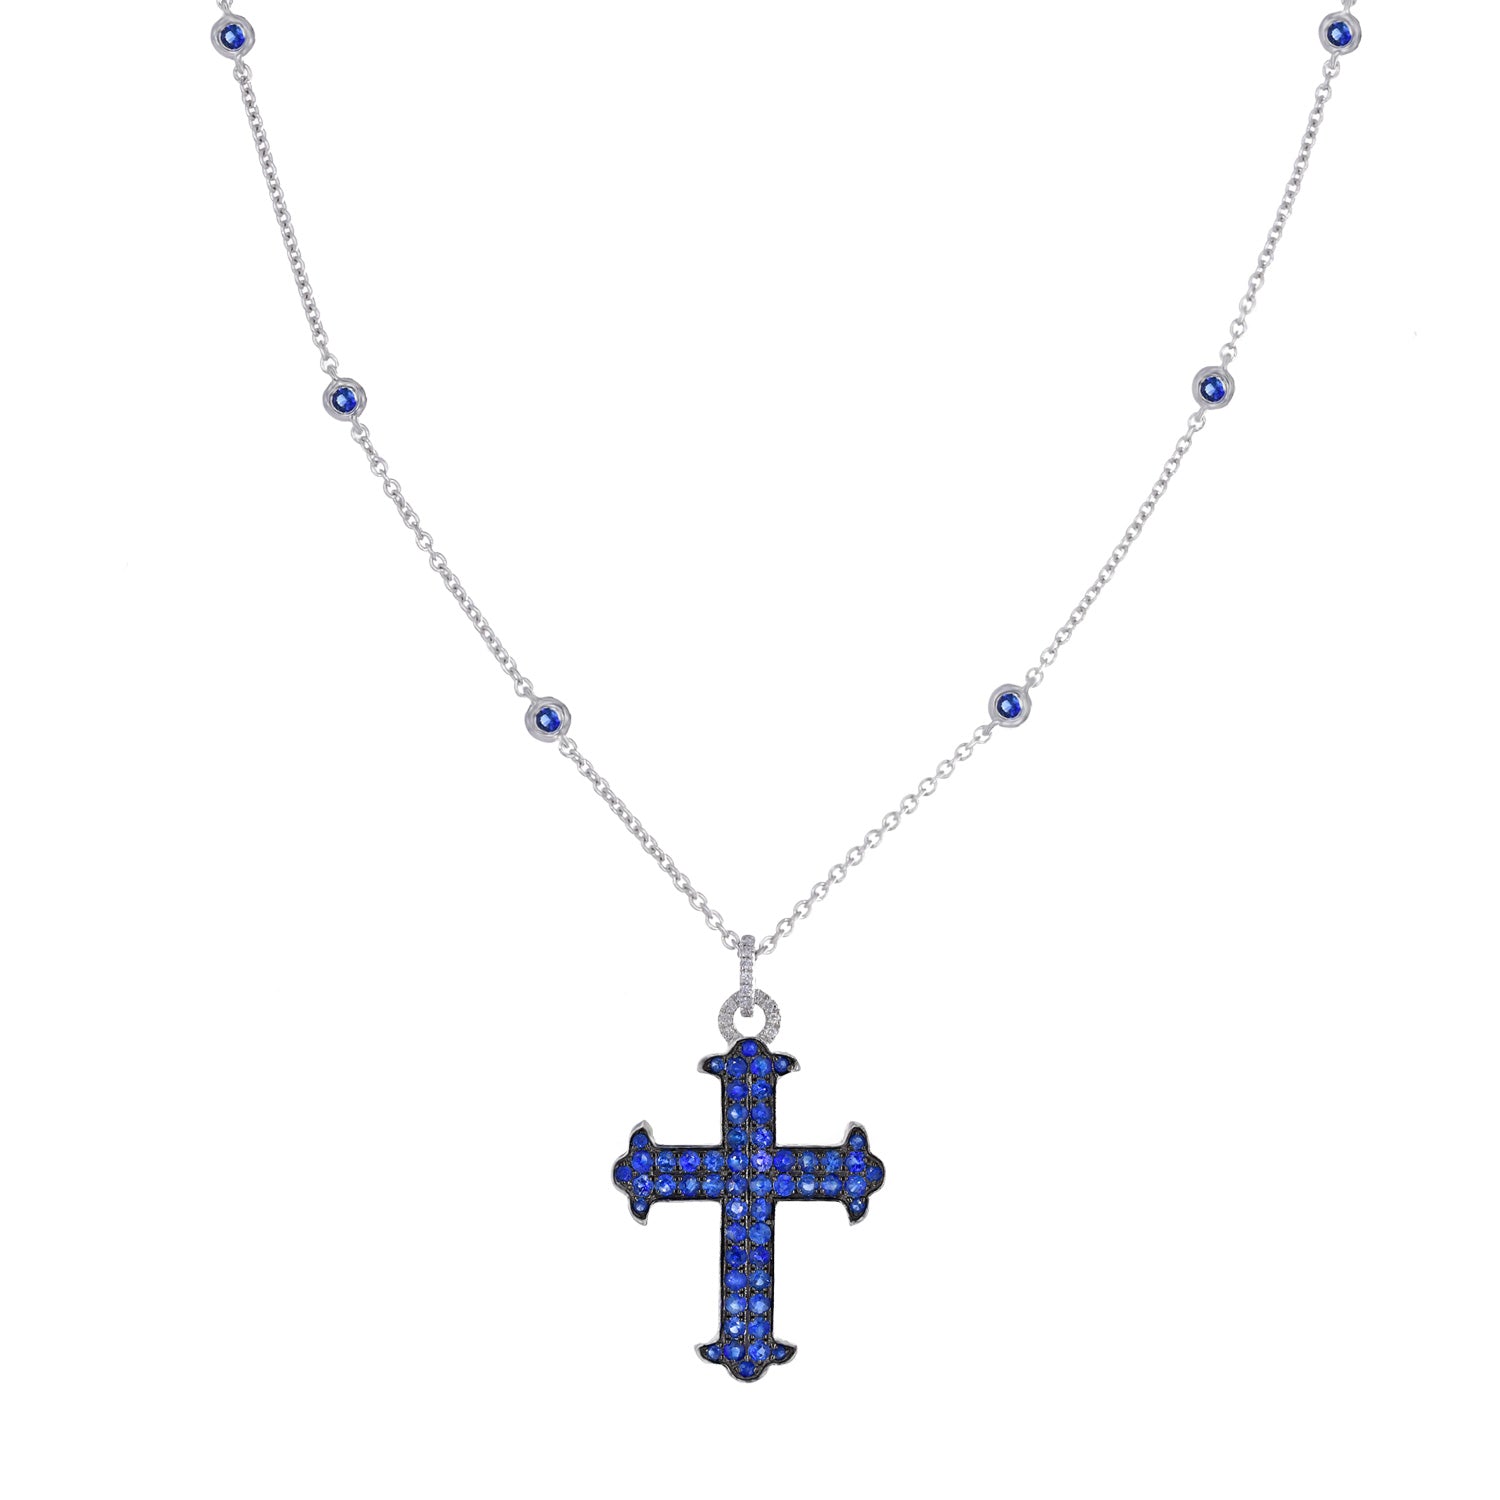 Sapphire Cross Necklace. Blue cross necklace